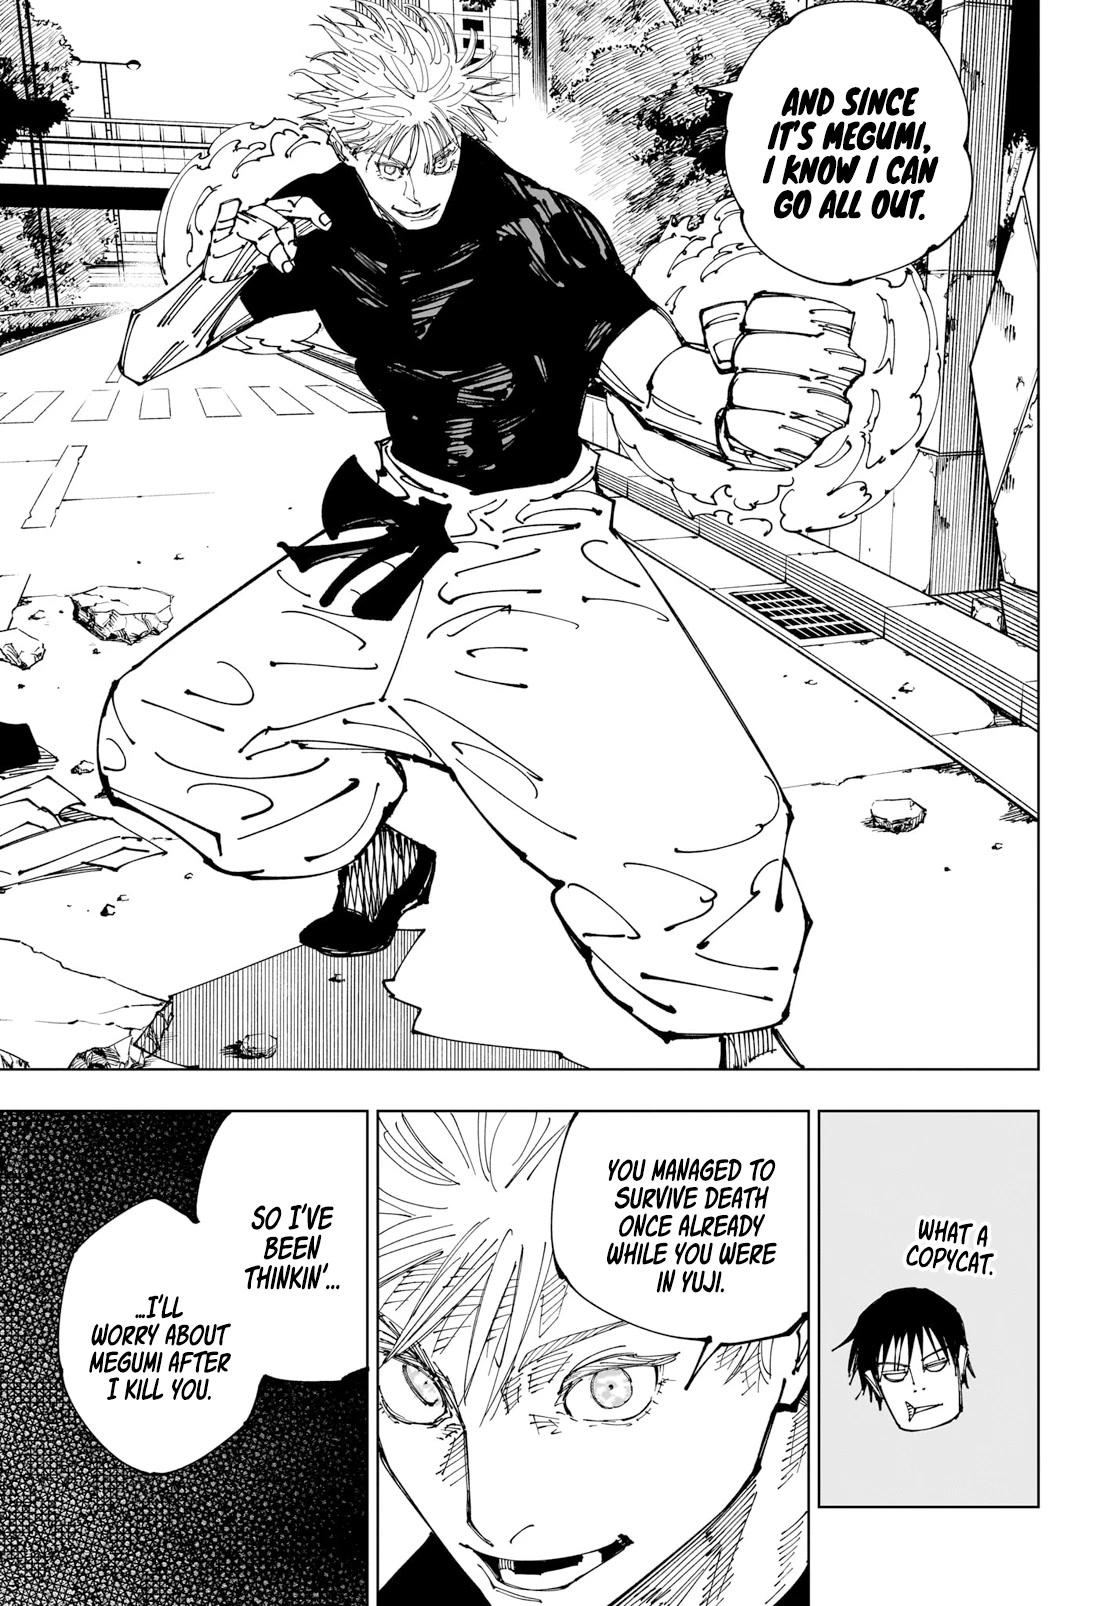 Jujutsu Kaisen Chapter 224: The Decisive Battle In The Uninhabited, Demon-Infested Shinjuku ② page 4 - Mangakakalot